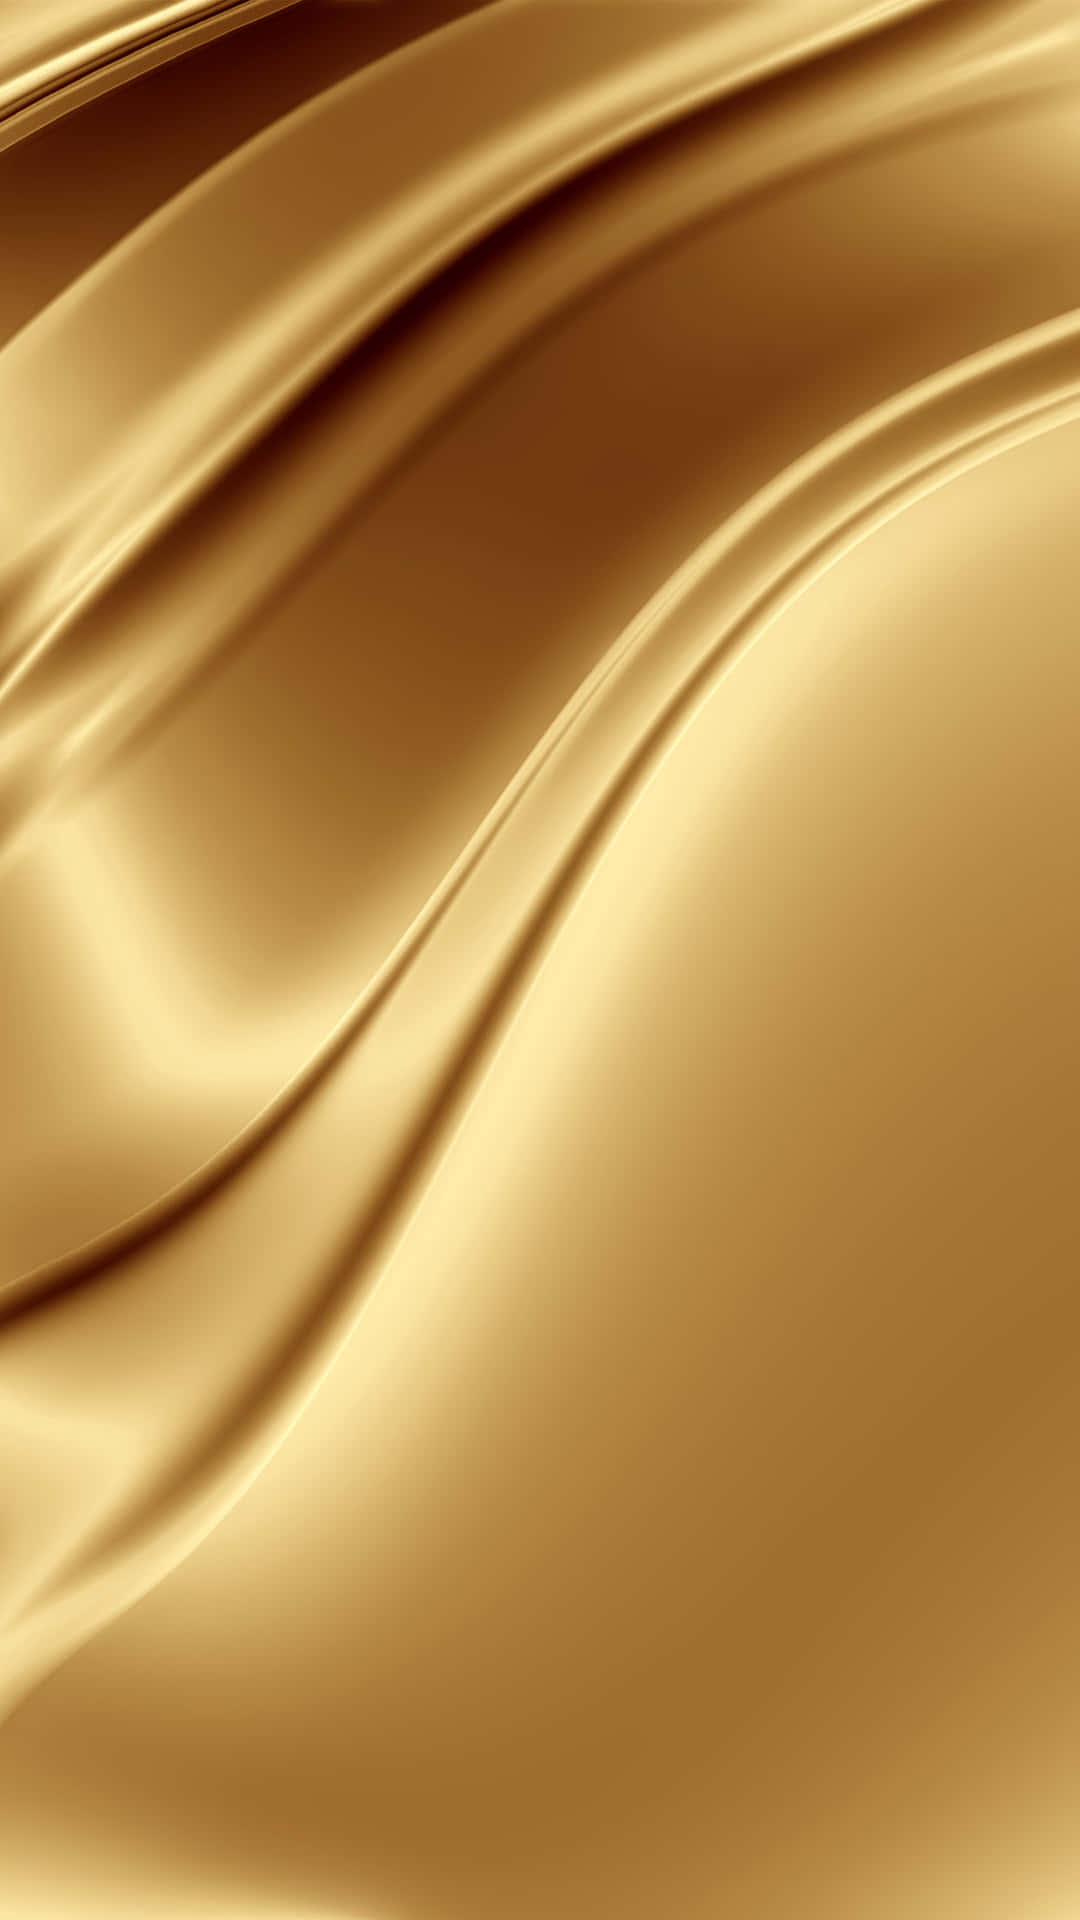 Gold Iphone Liquid Metal Texture